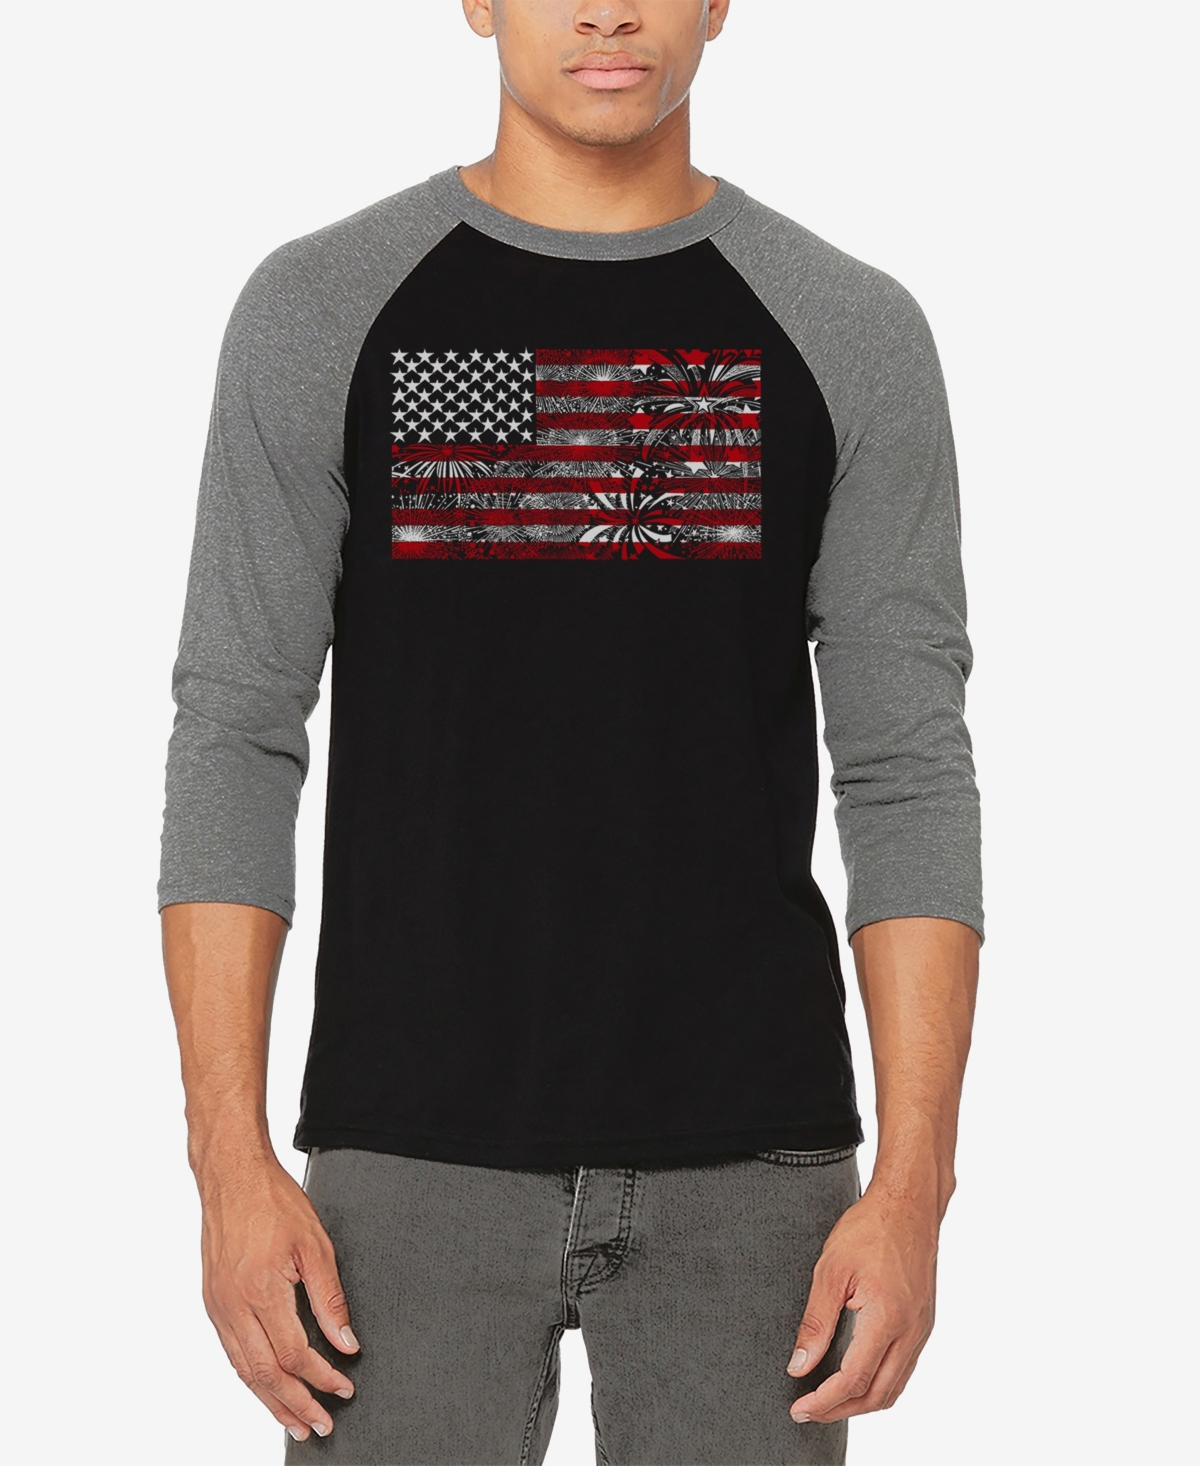 La Pop Art Men's Raglan Baseball Word Art Fireworks American Flag T-shirt